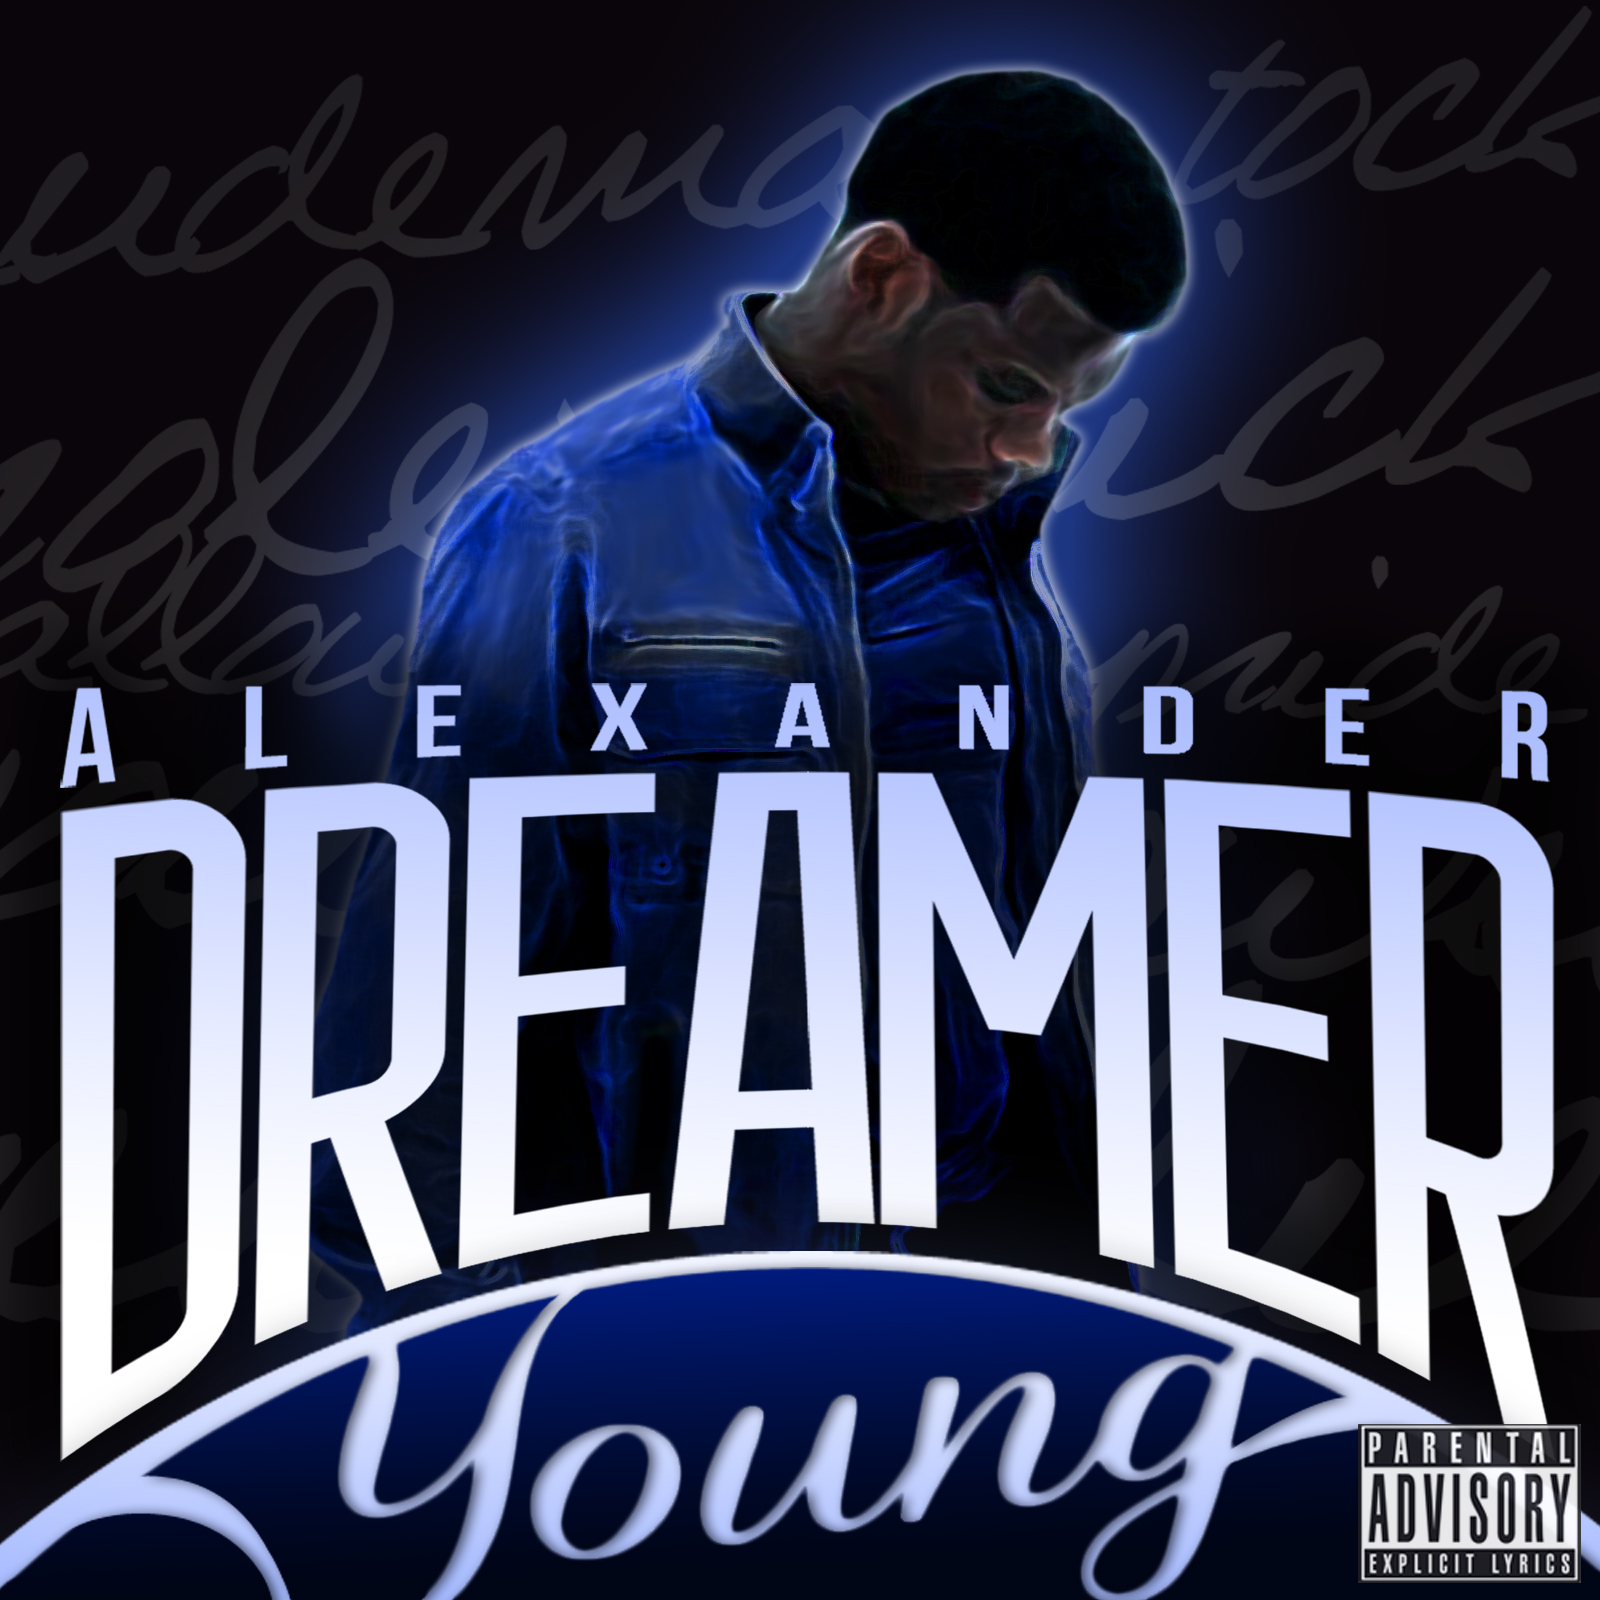 Alex Dreamer. Twista & Rello Dreamer - News @ 9. This dreams песня